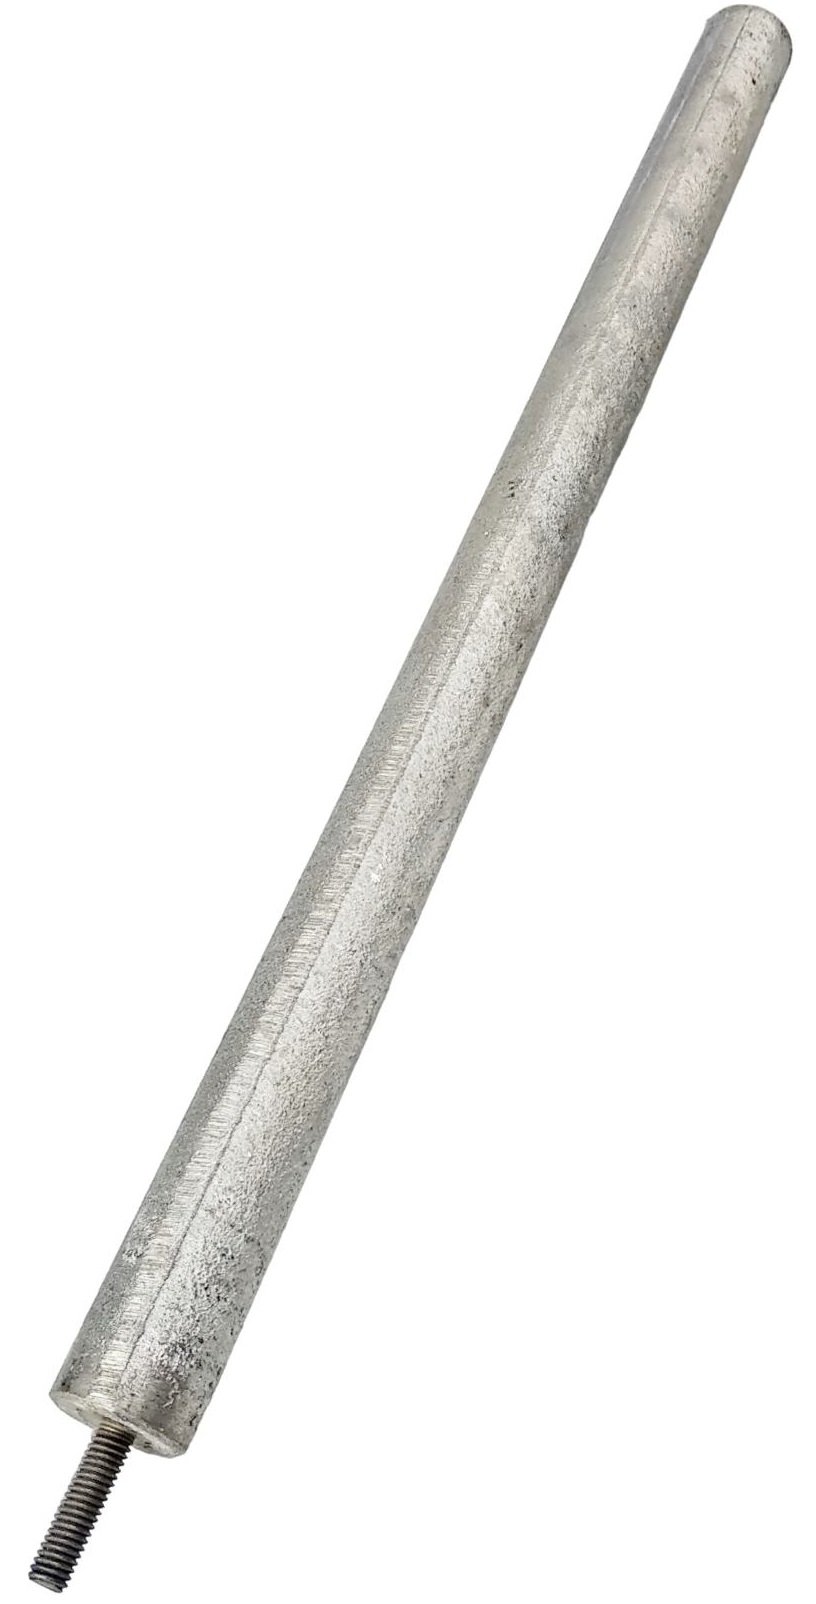 Анод магниевый D21/L300 М6 на ножке до 3см с упором для прокладки